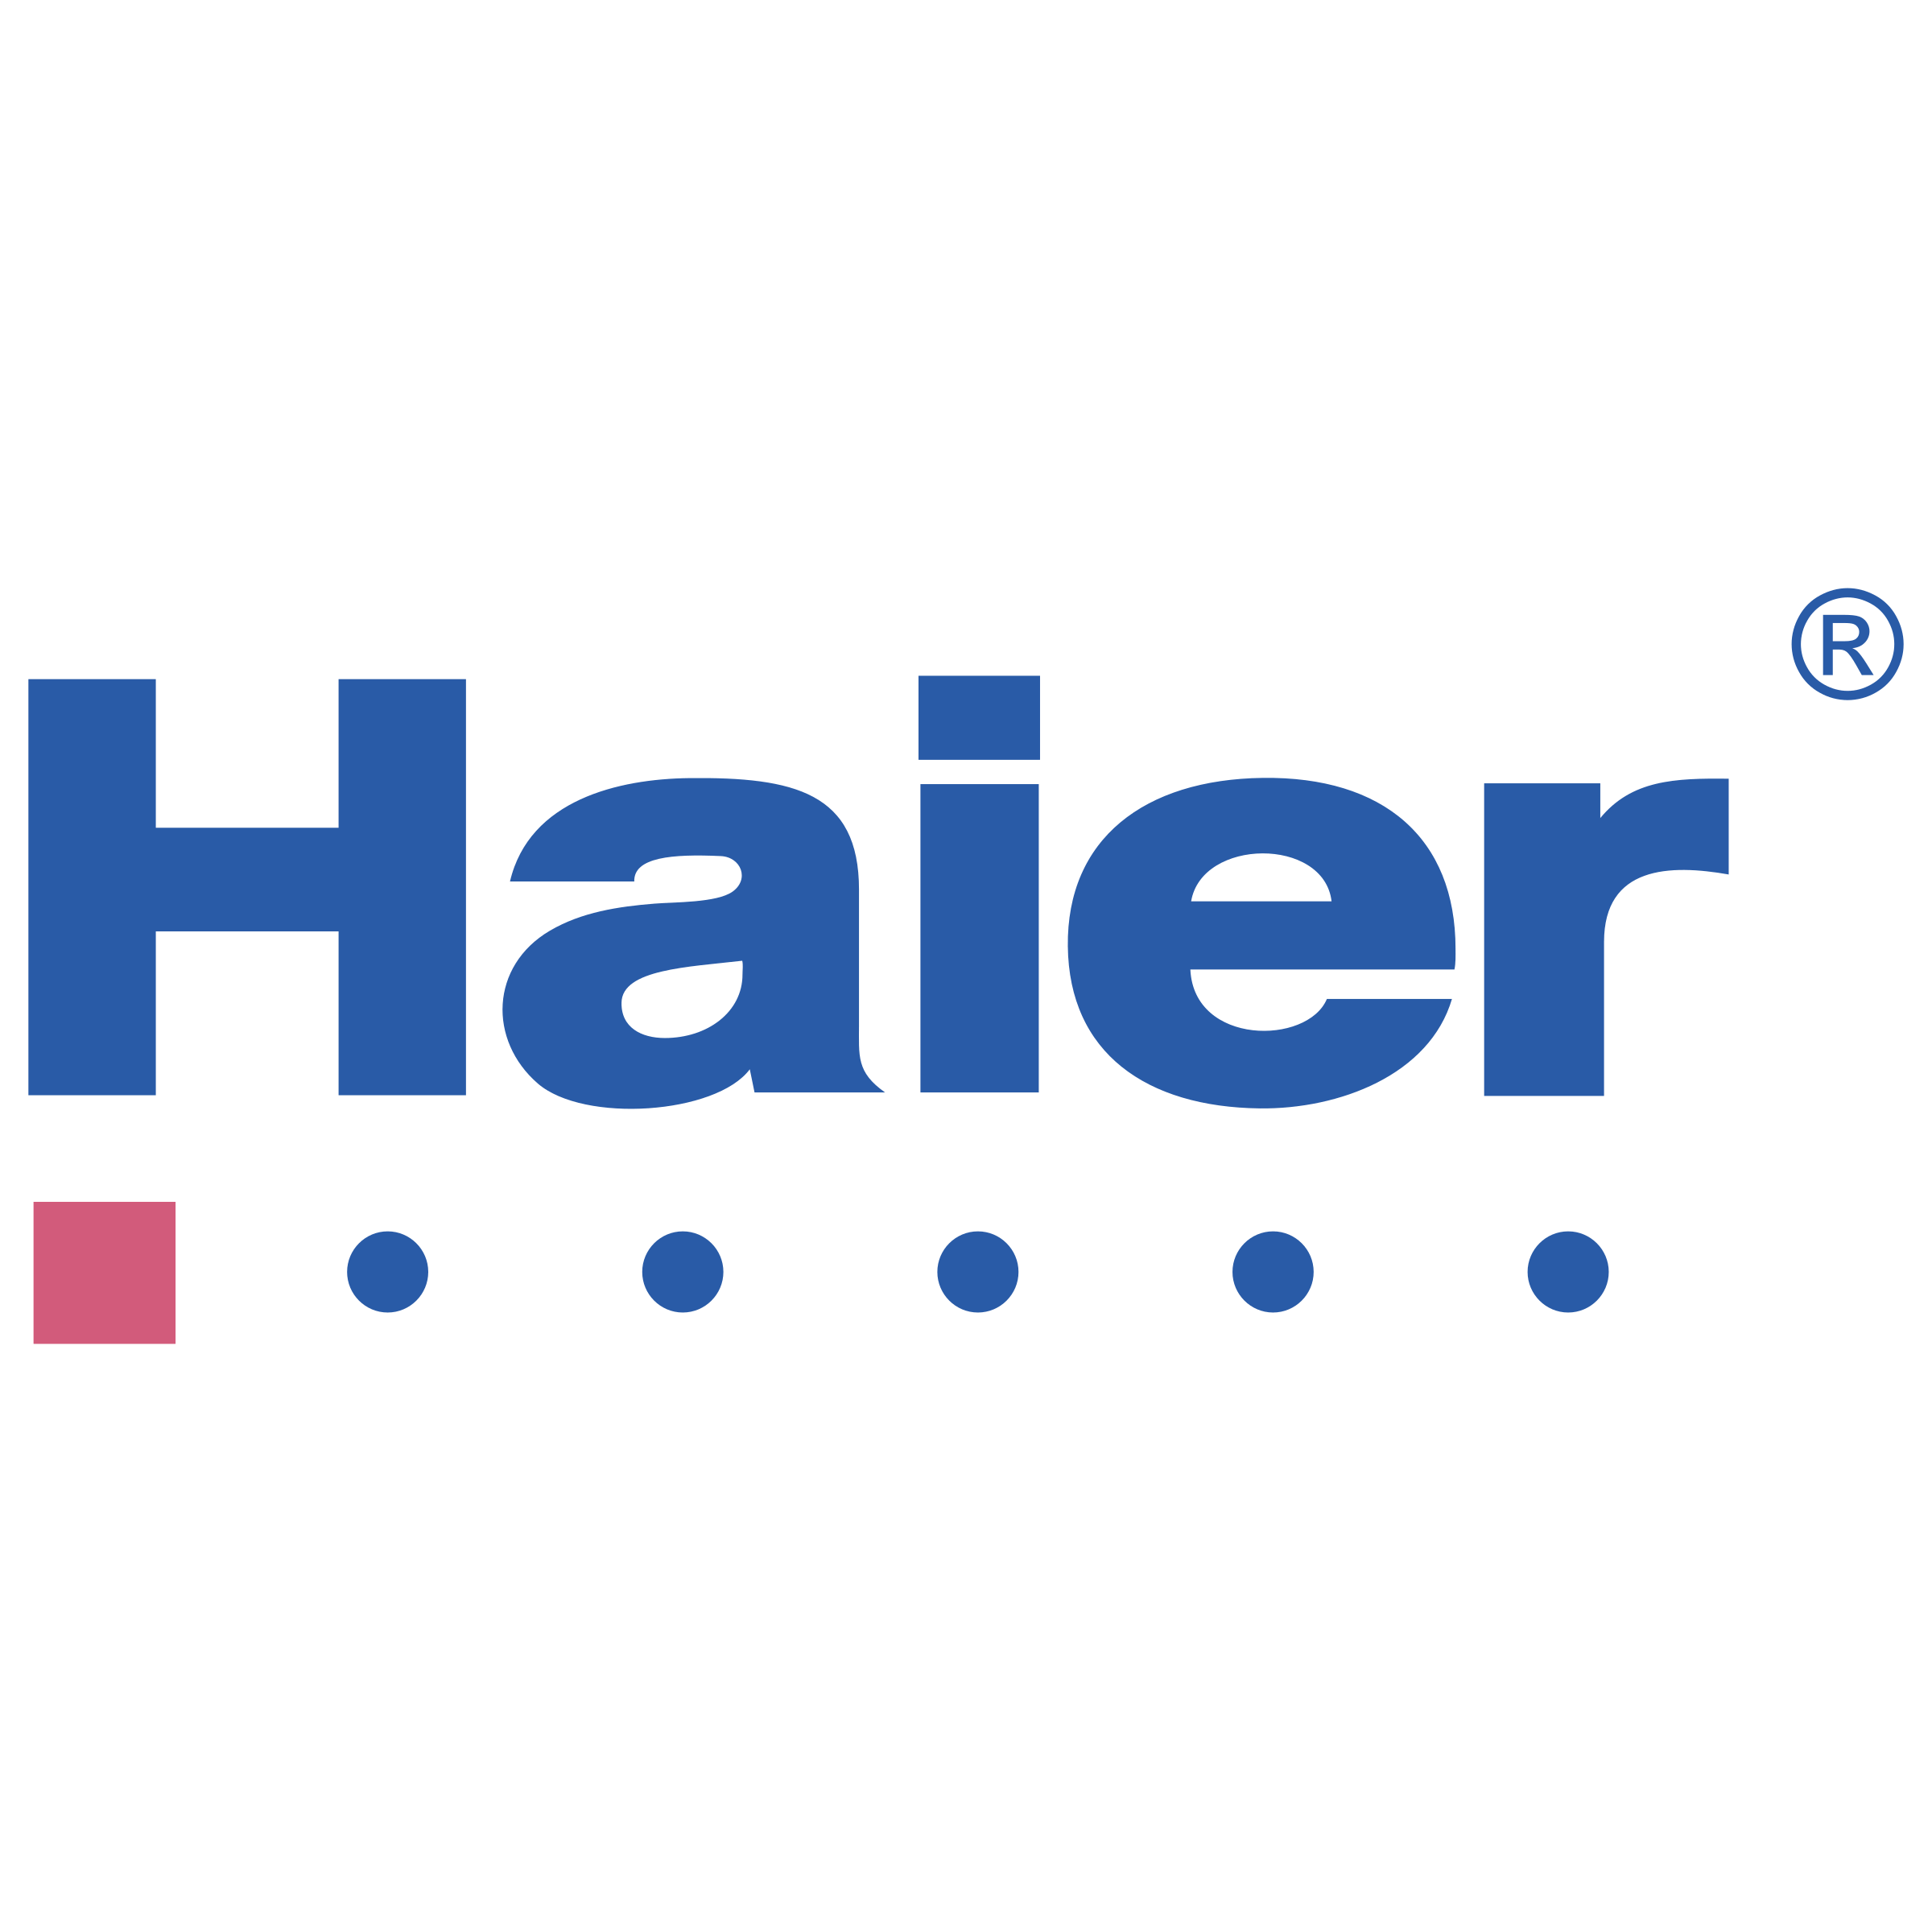 Haier Logo - Haier Logo PNG Transparent & SVG Vector - Freebie Supply